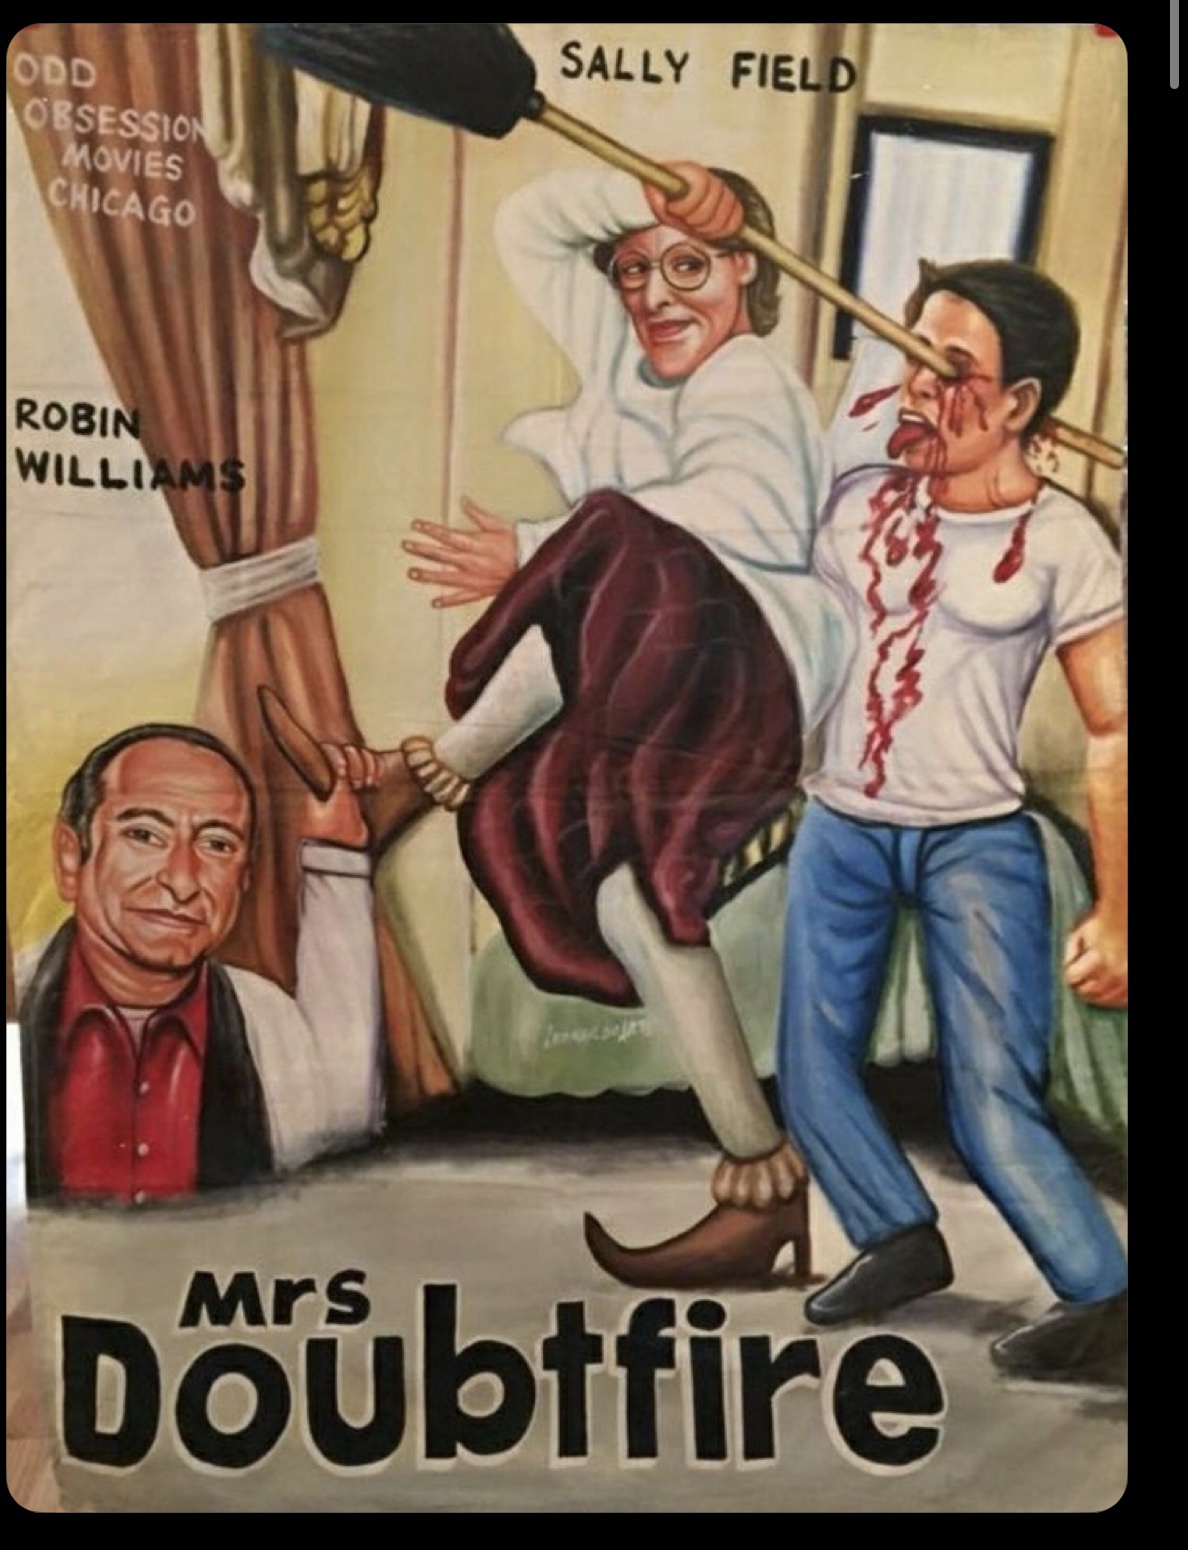 ghana movie posters ms doubtfire - Sally Field Ddd Orsession Movies Chicago Robin Williams Doubtfire